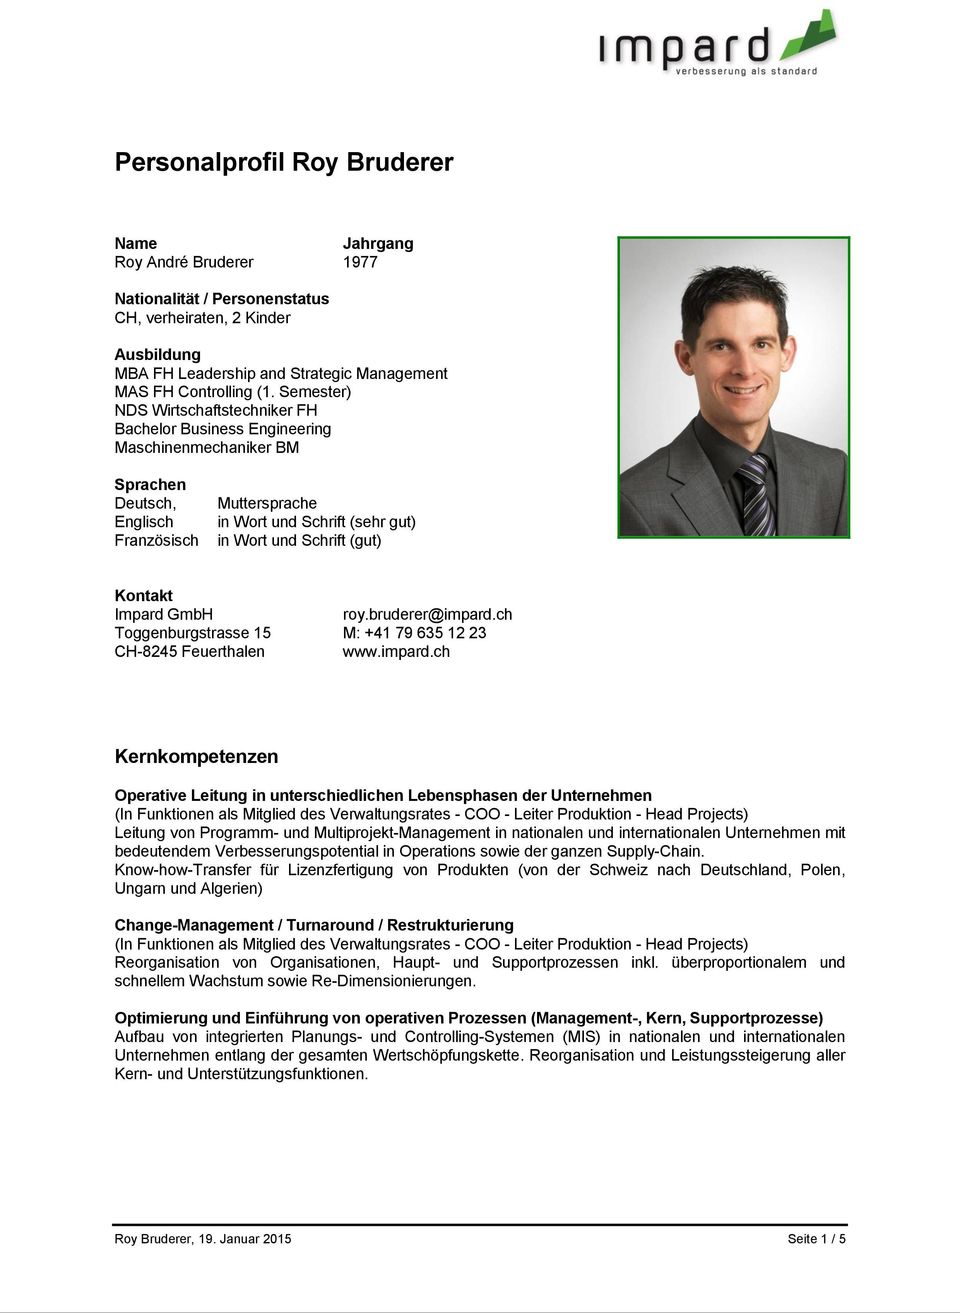 (gut) Kontakt Impard GmbH roy.bruderer@impard.